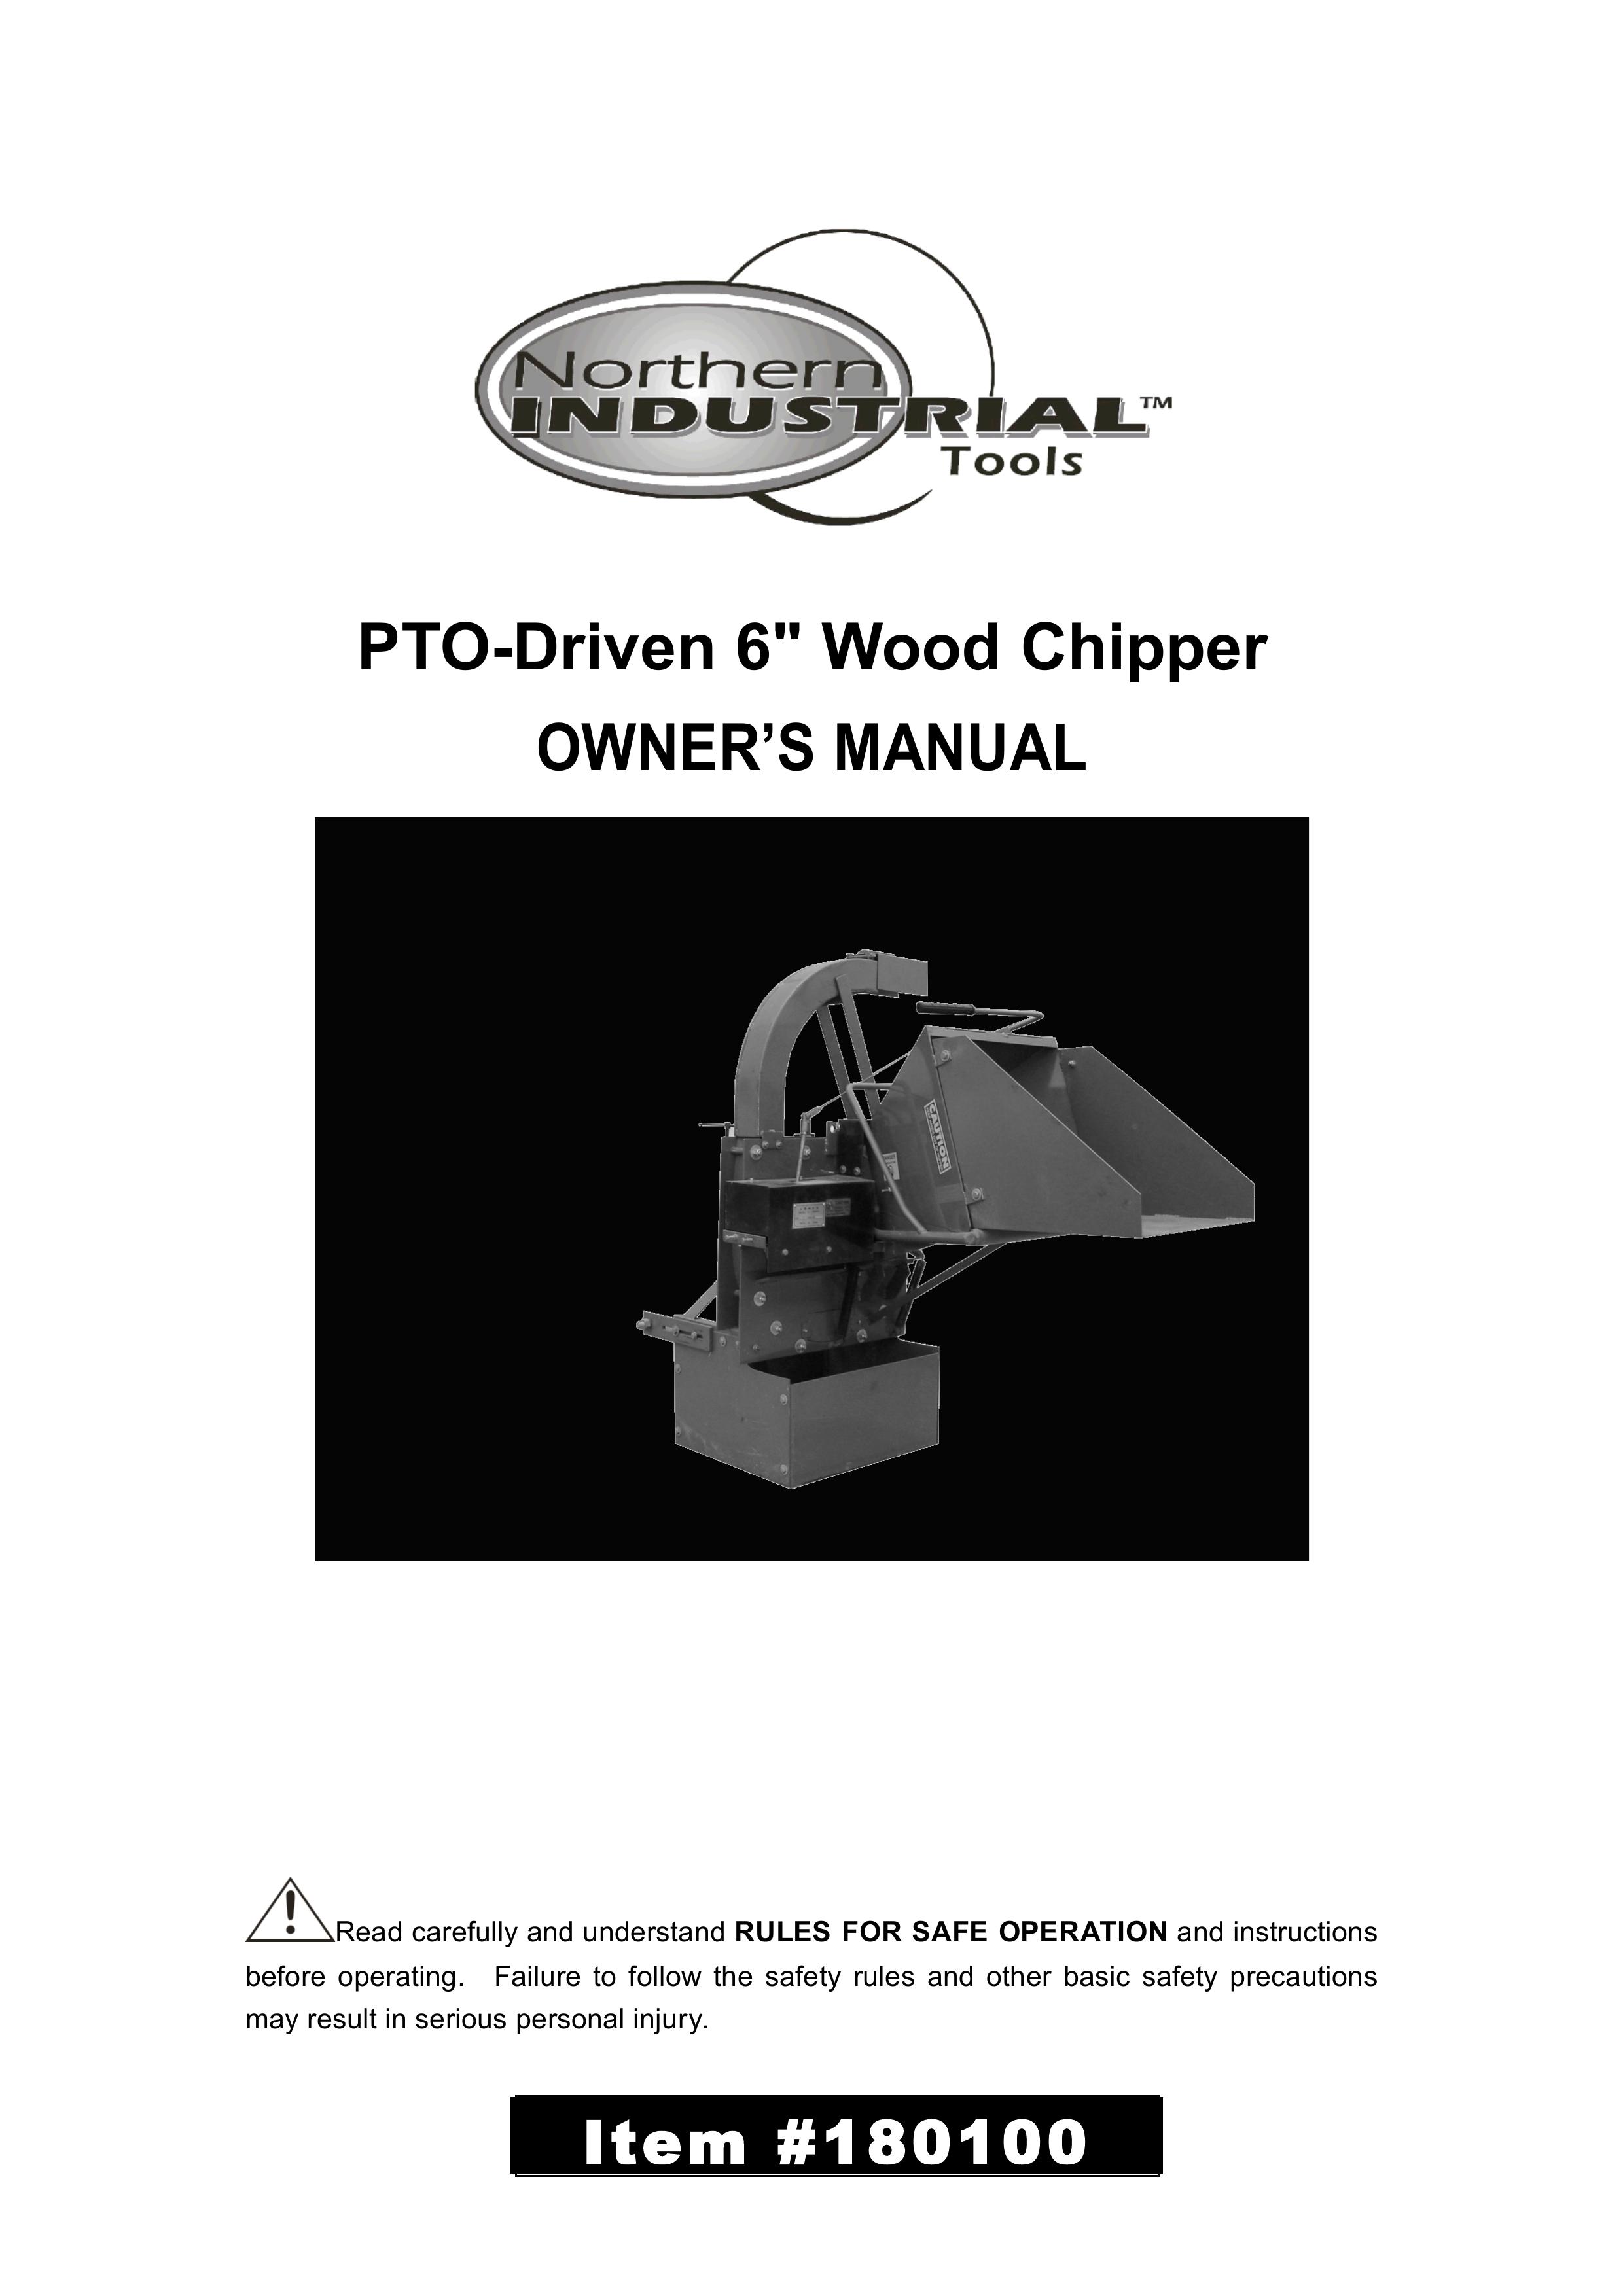 Panasonic PTO 540 RPM Chipper User Manual